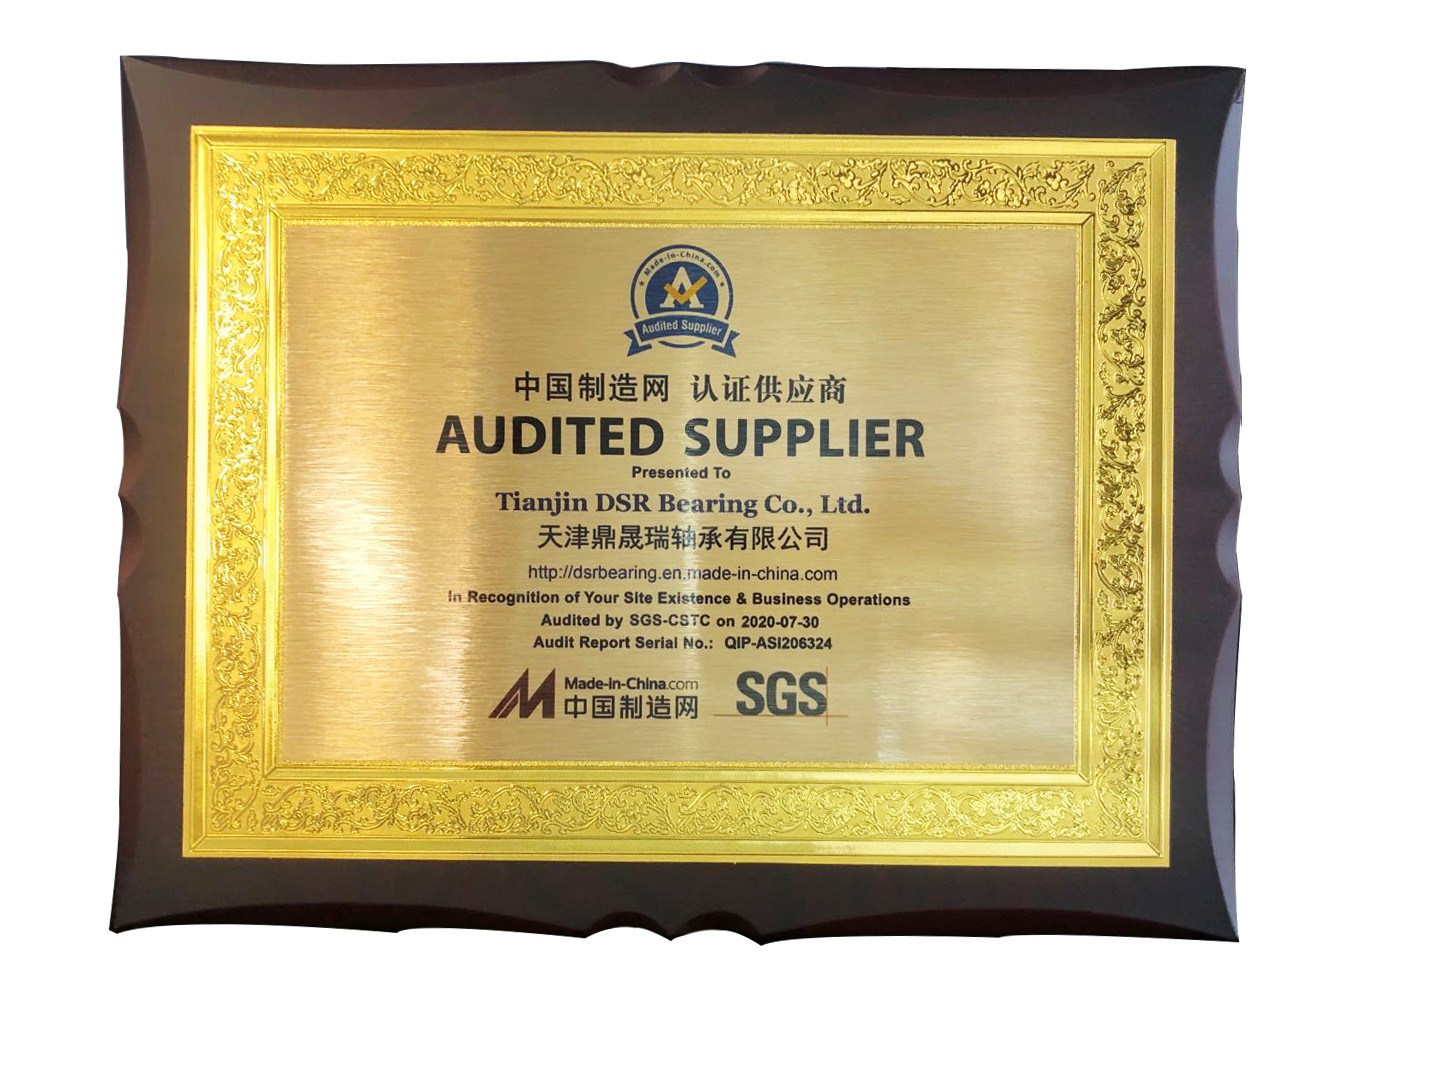 SGS certification